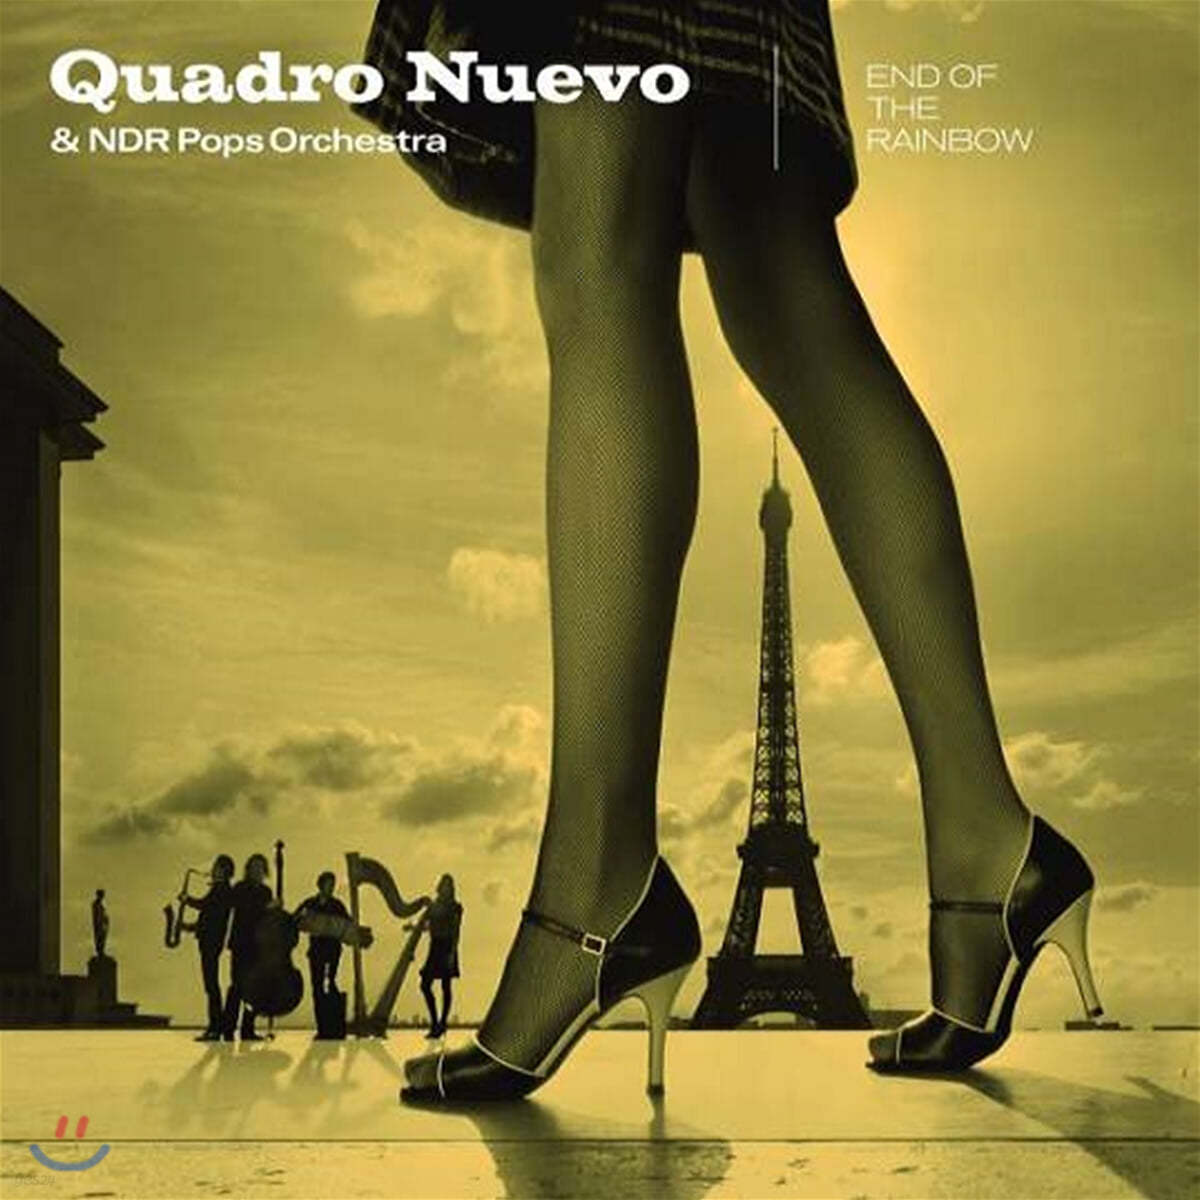 Quadro Nuevo (콰드로 누에보) - End Of The Rainbow [2LP]